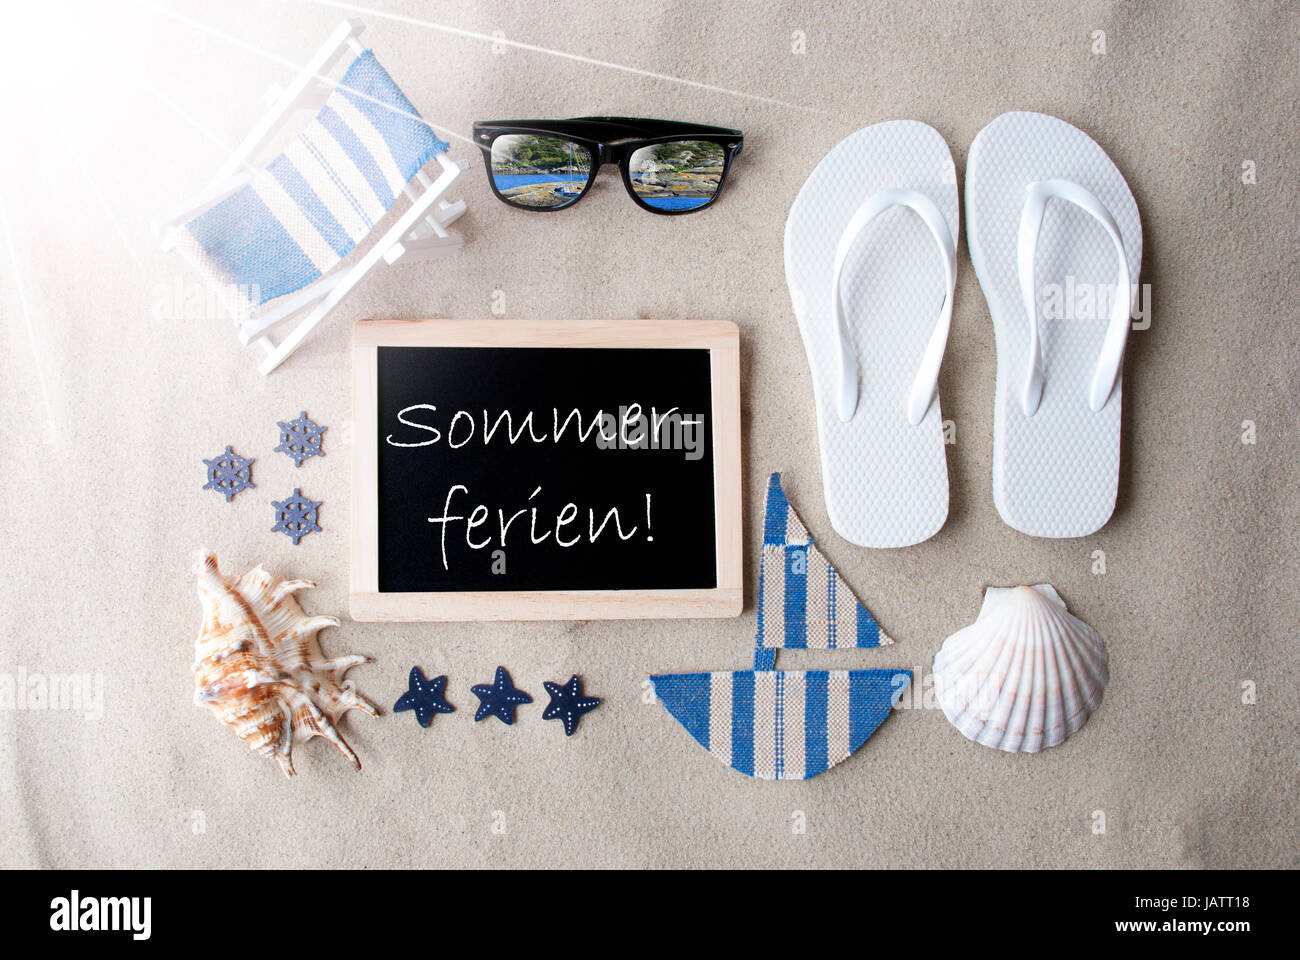 Sunny Blackboard On Sand, Sommerferien Means Summer Holidays Stock Photo